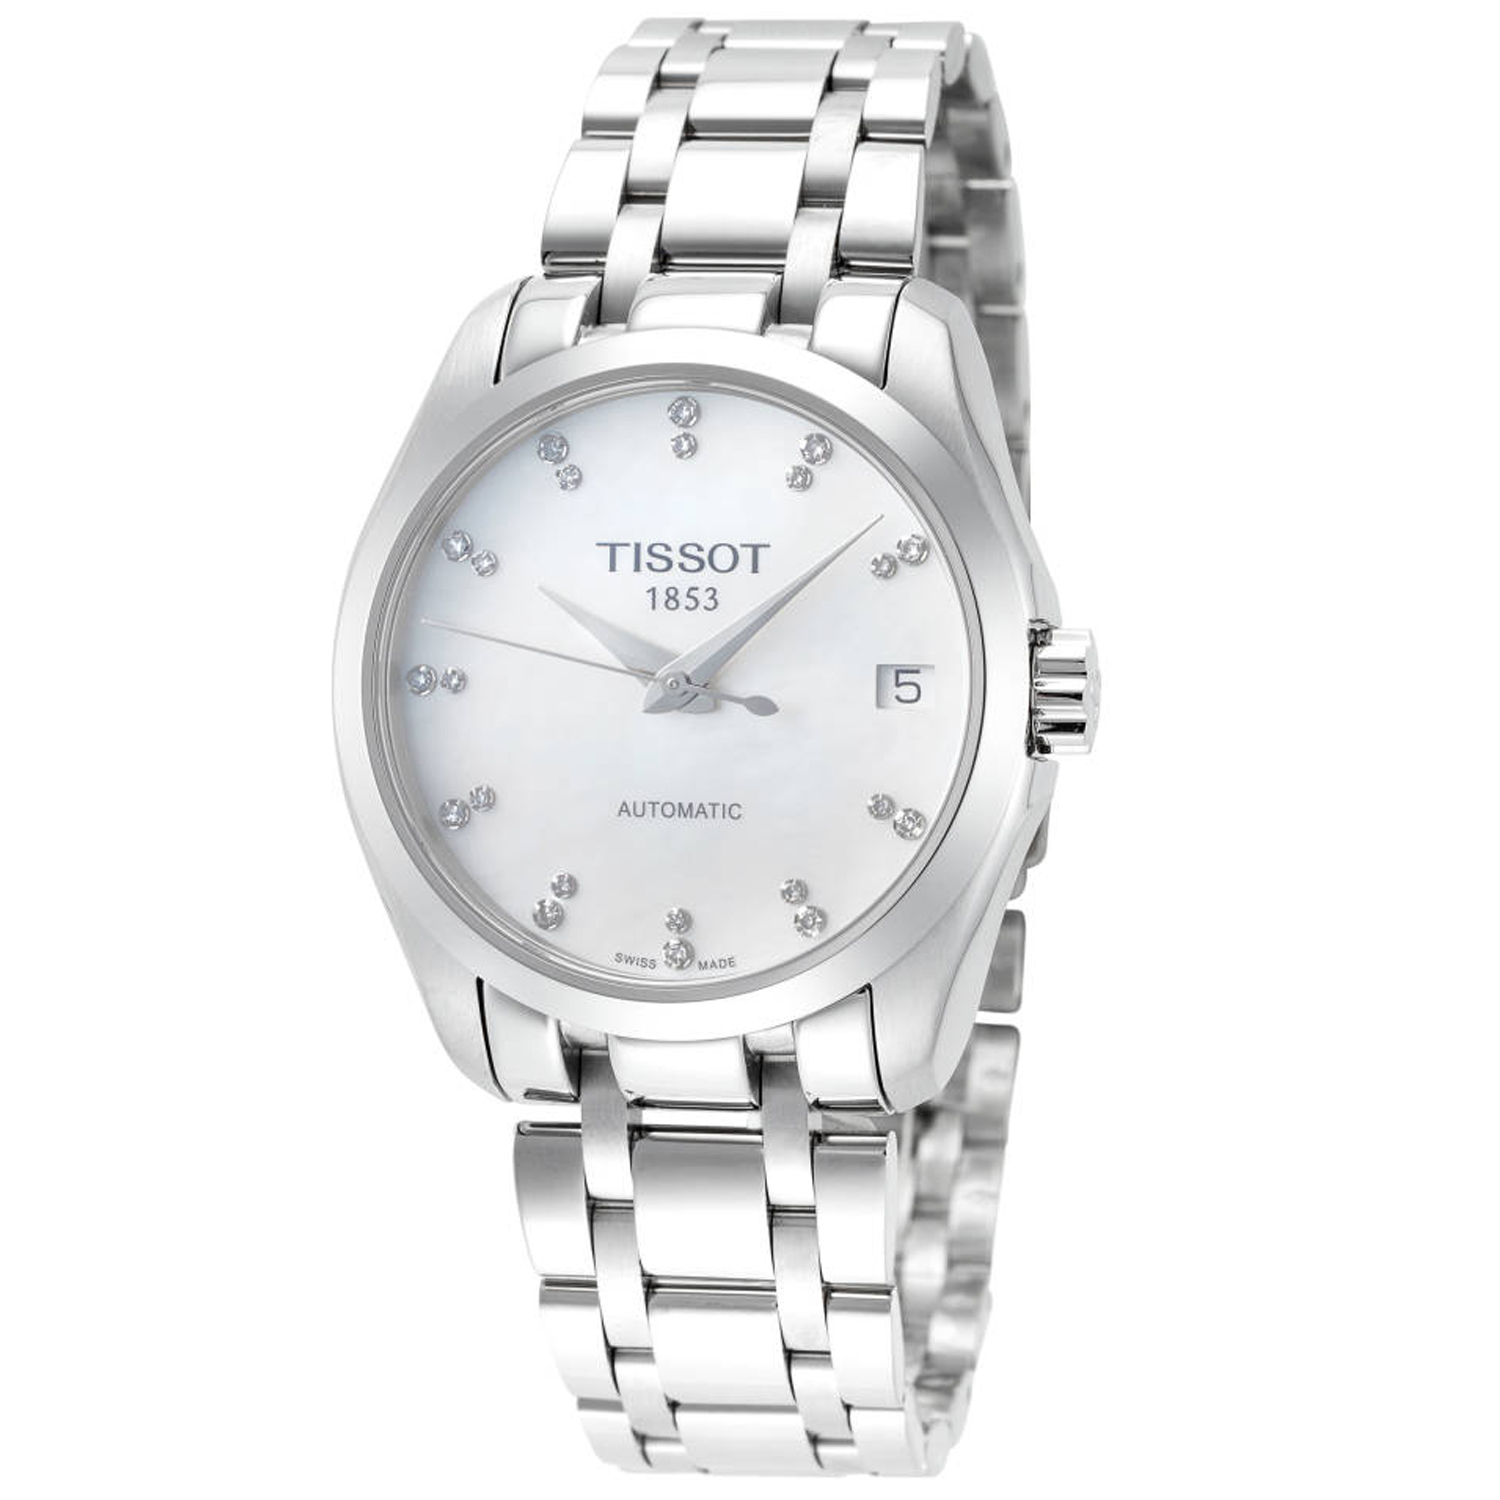 Tissot T-Trend Ladies Watch T0352071111600